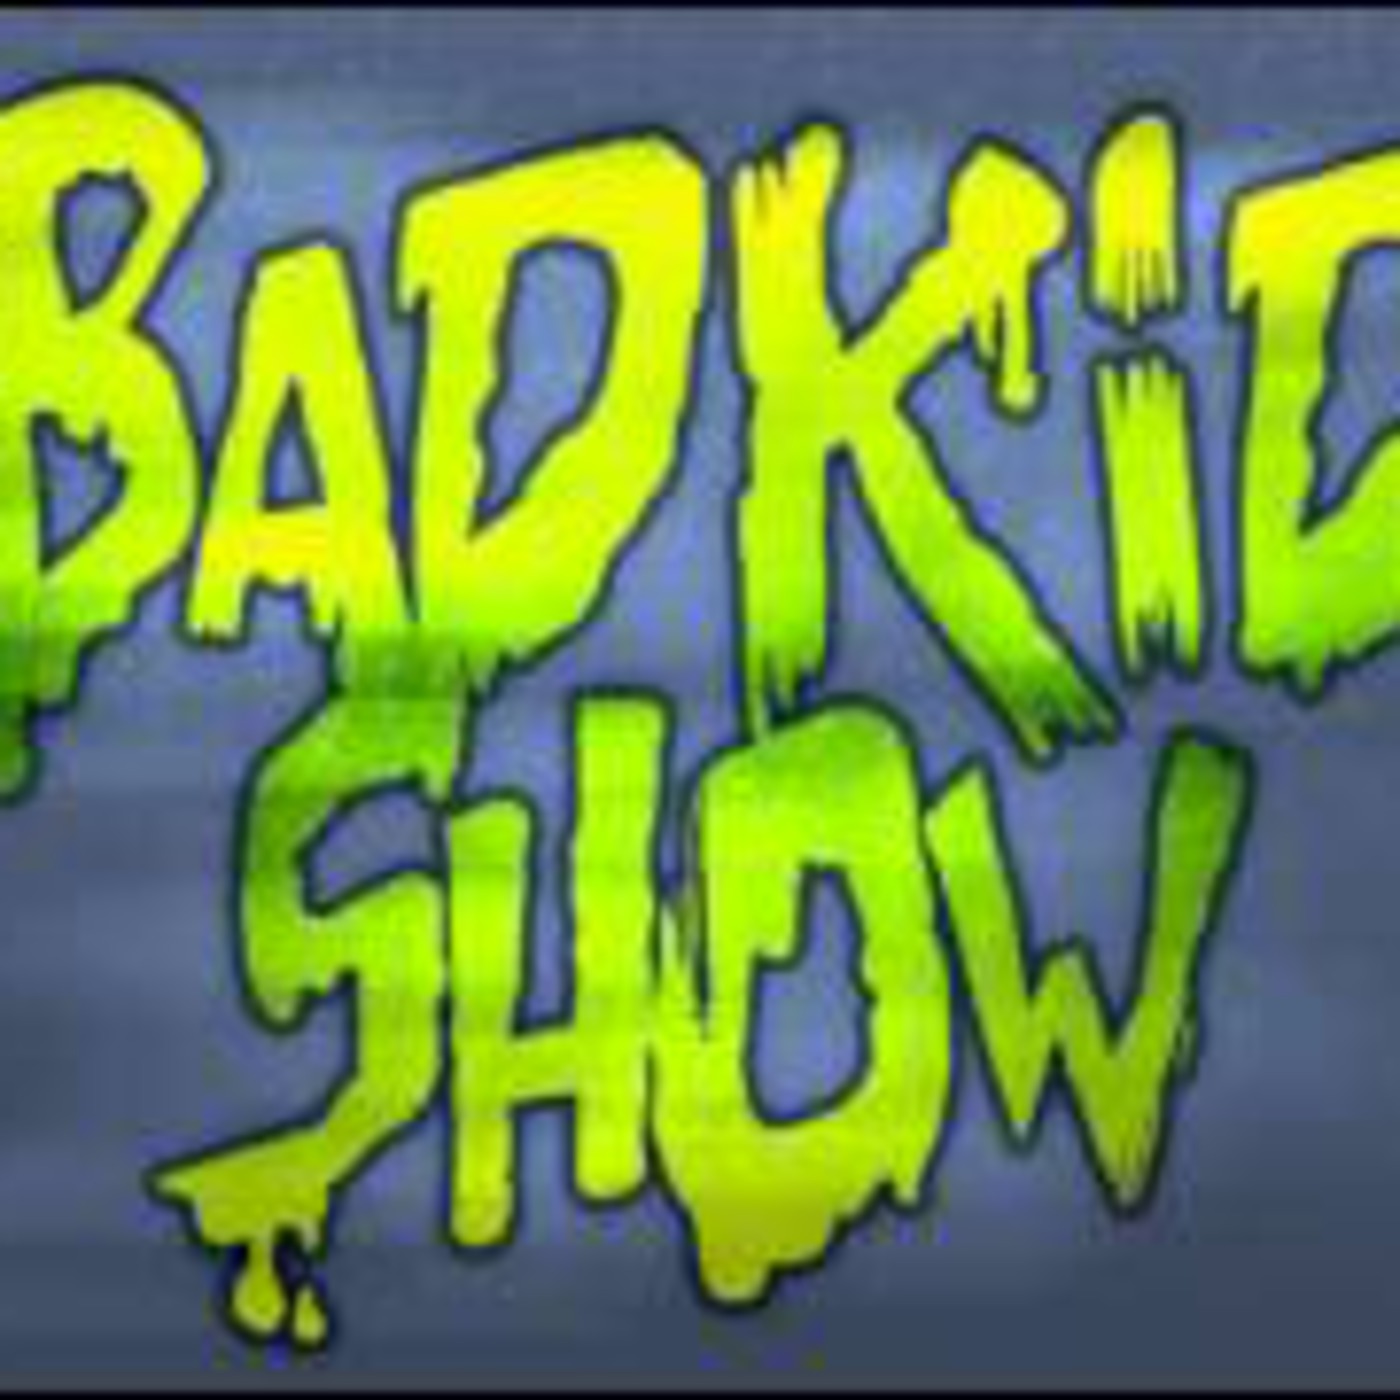 Bad Kid Show PodCast